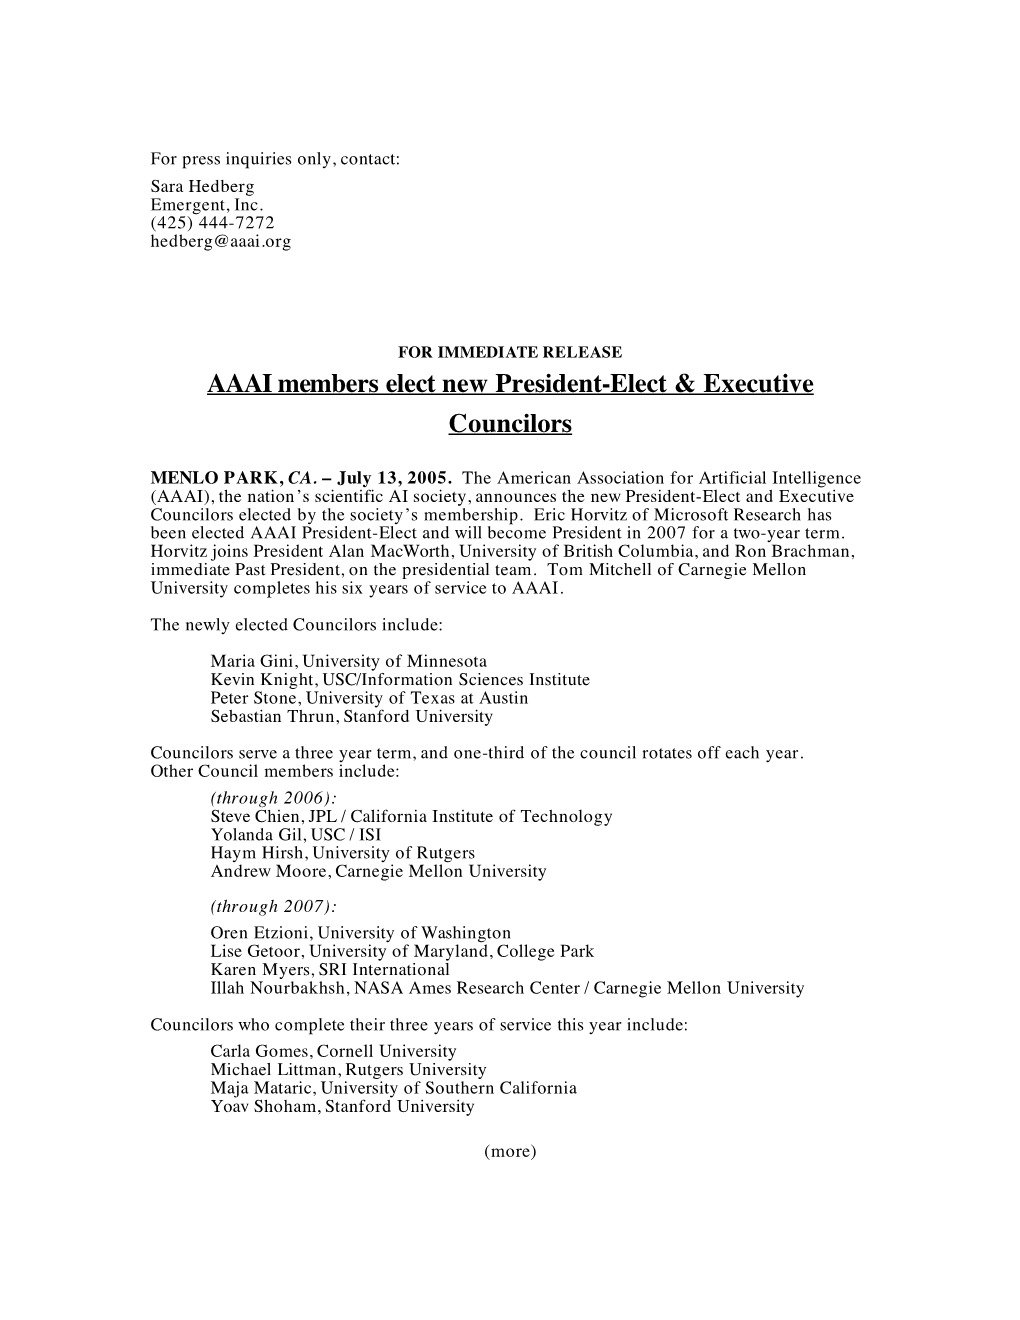 AAAI Members Elect New President-Elect & Executive